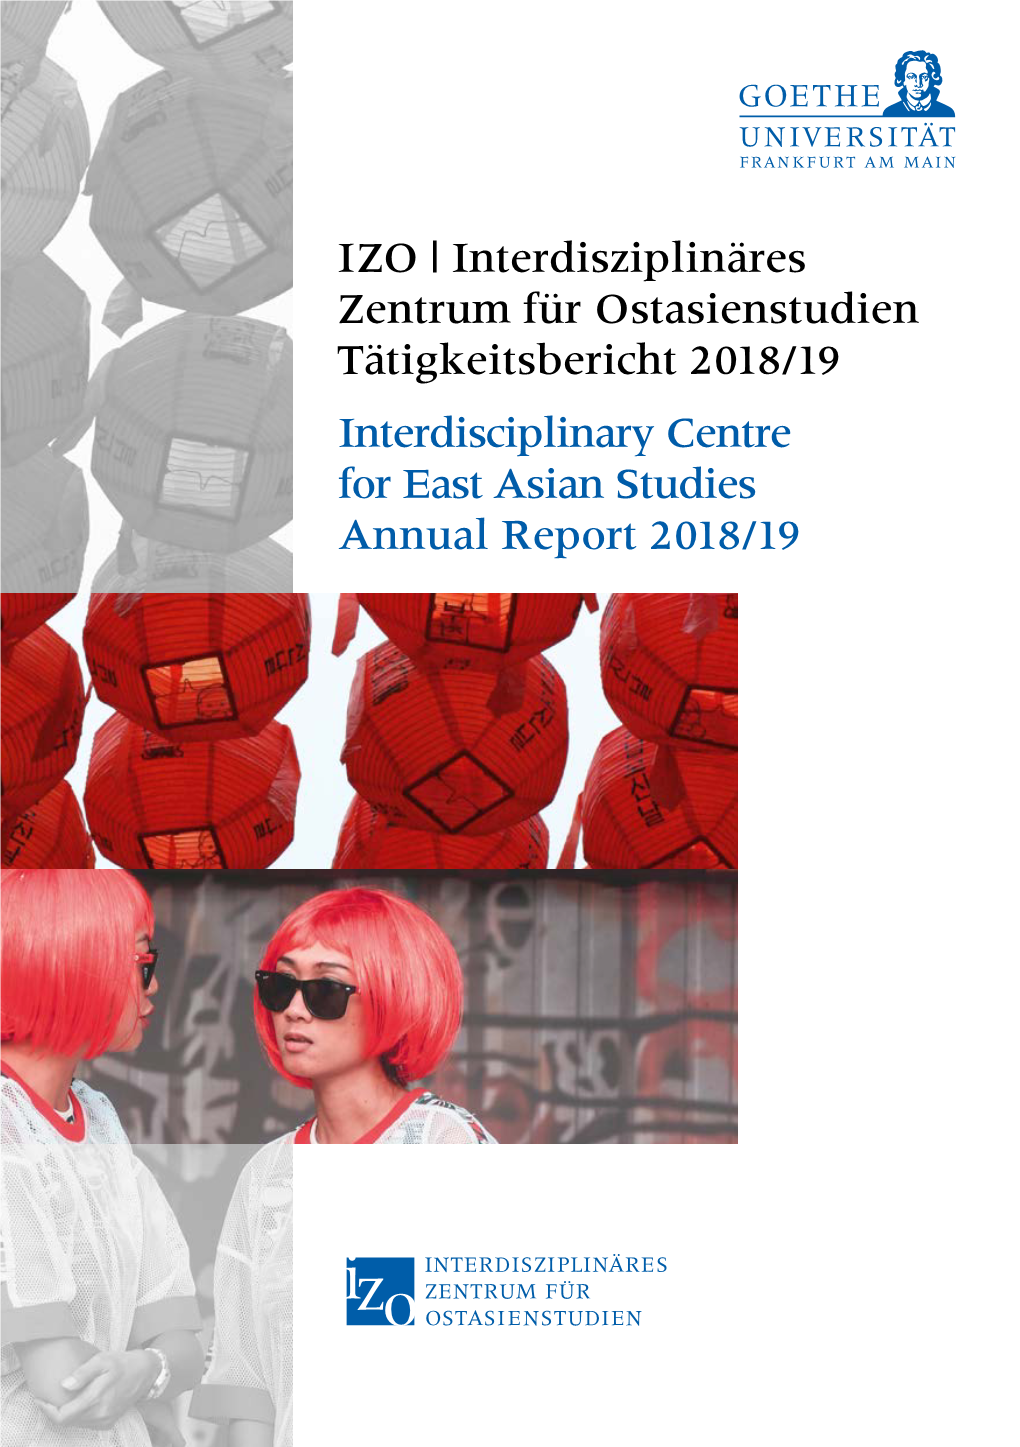 Interdisciplinary Centre for East Asian Studies Annual Report 2018/19